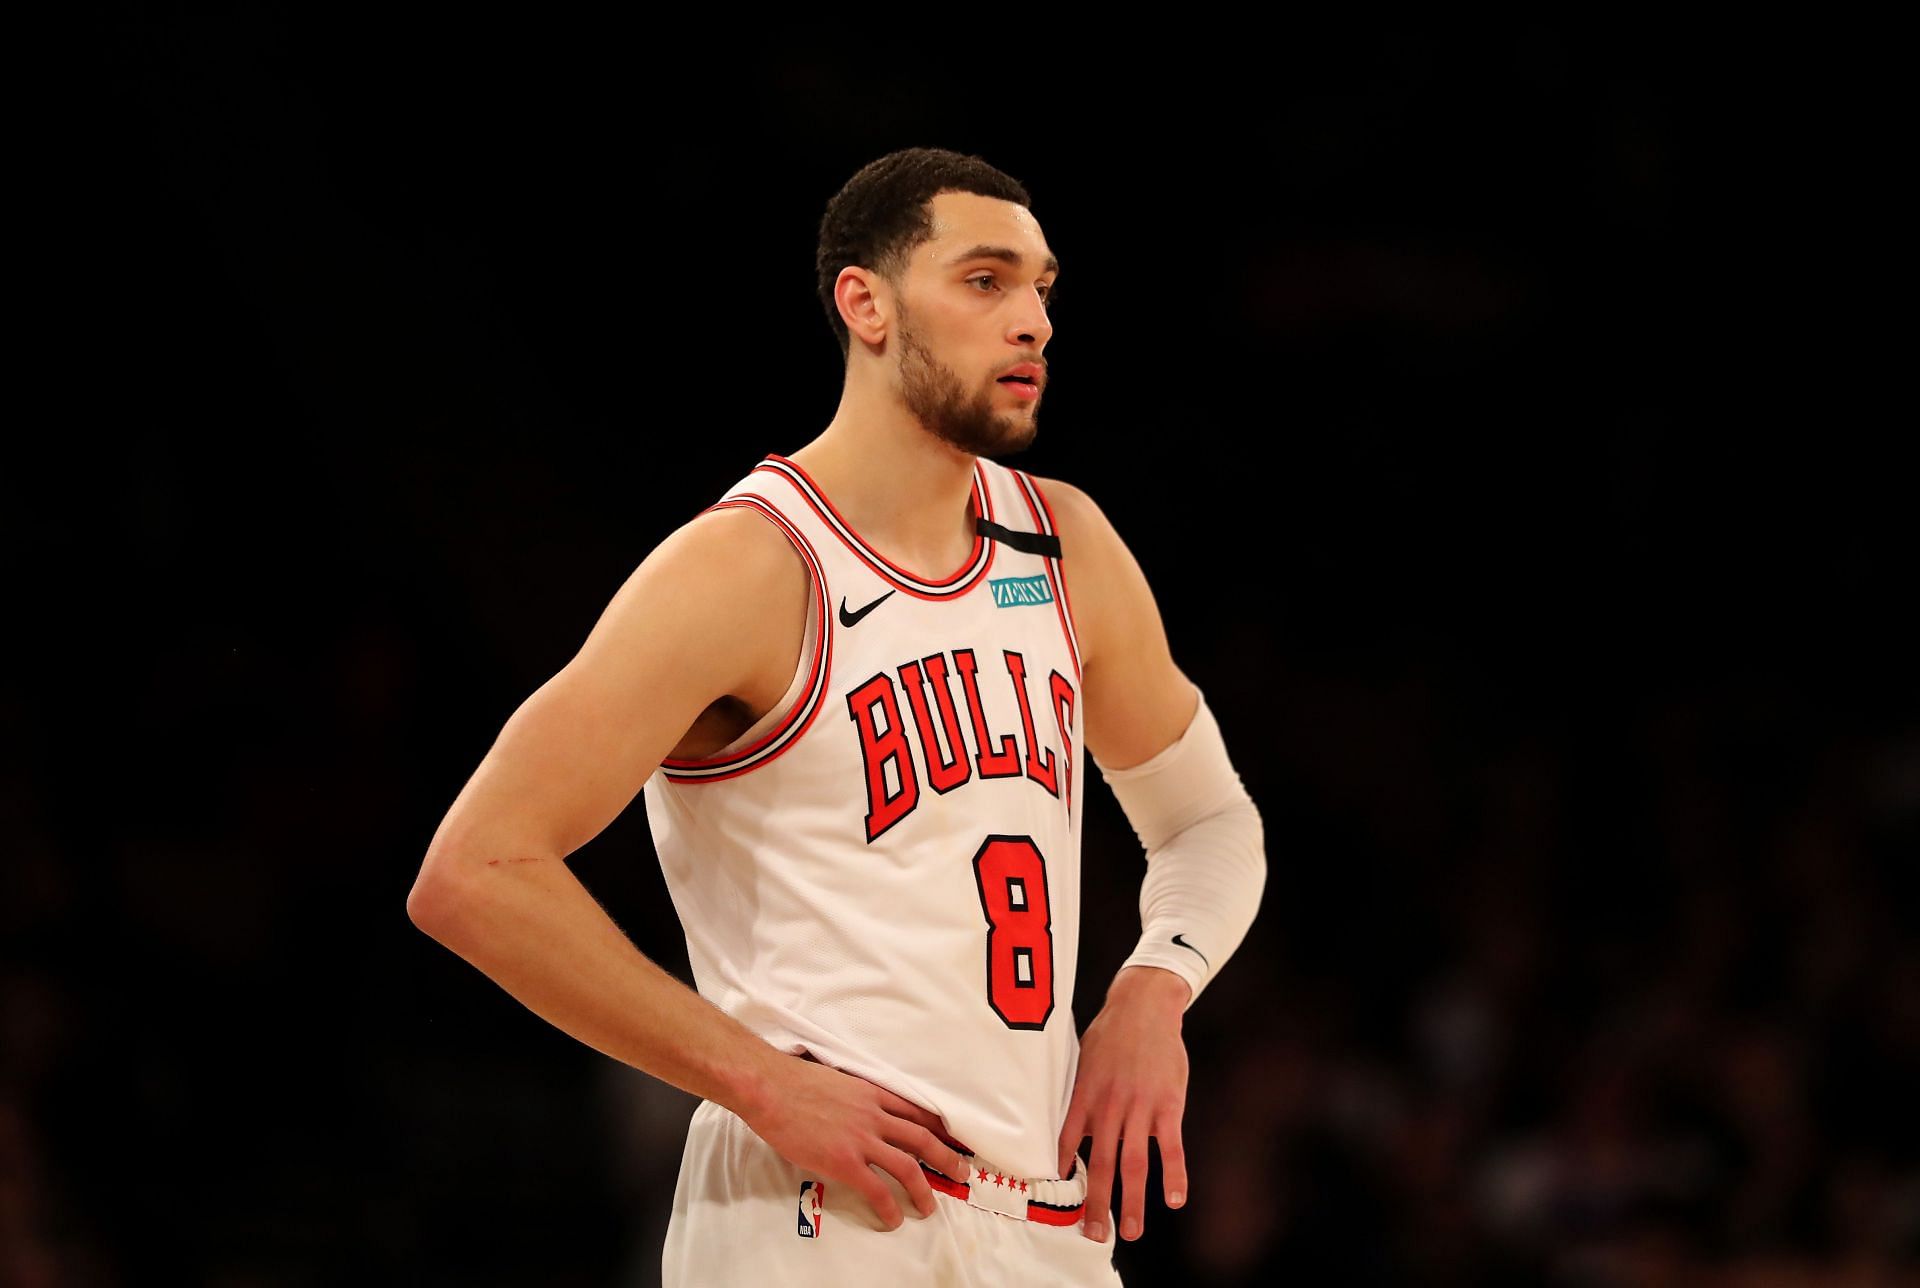 Chicago Bulls will host the New York Knicks on Sunday